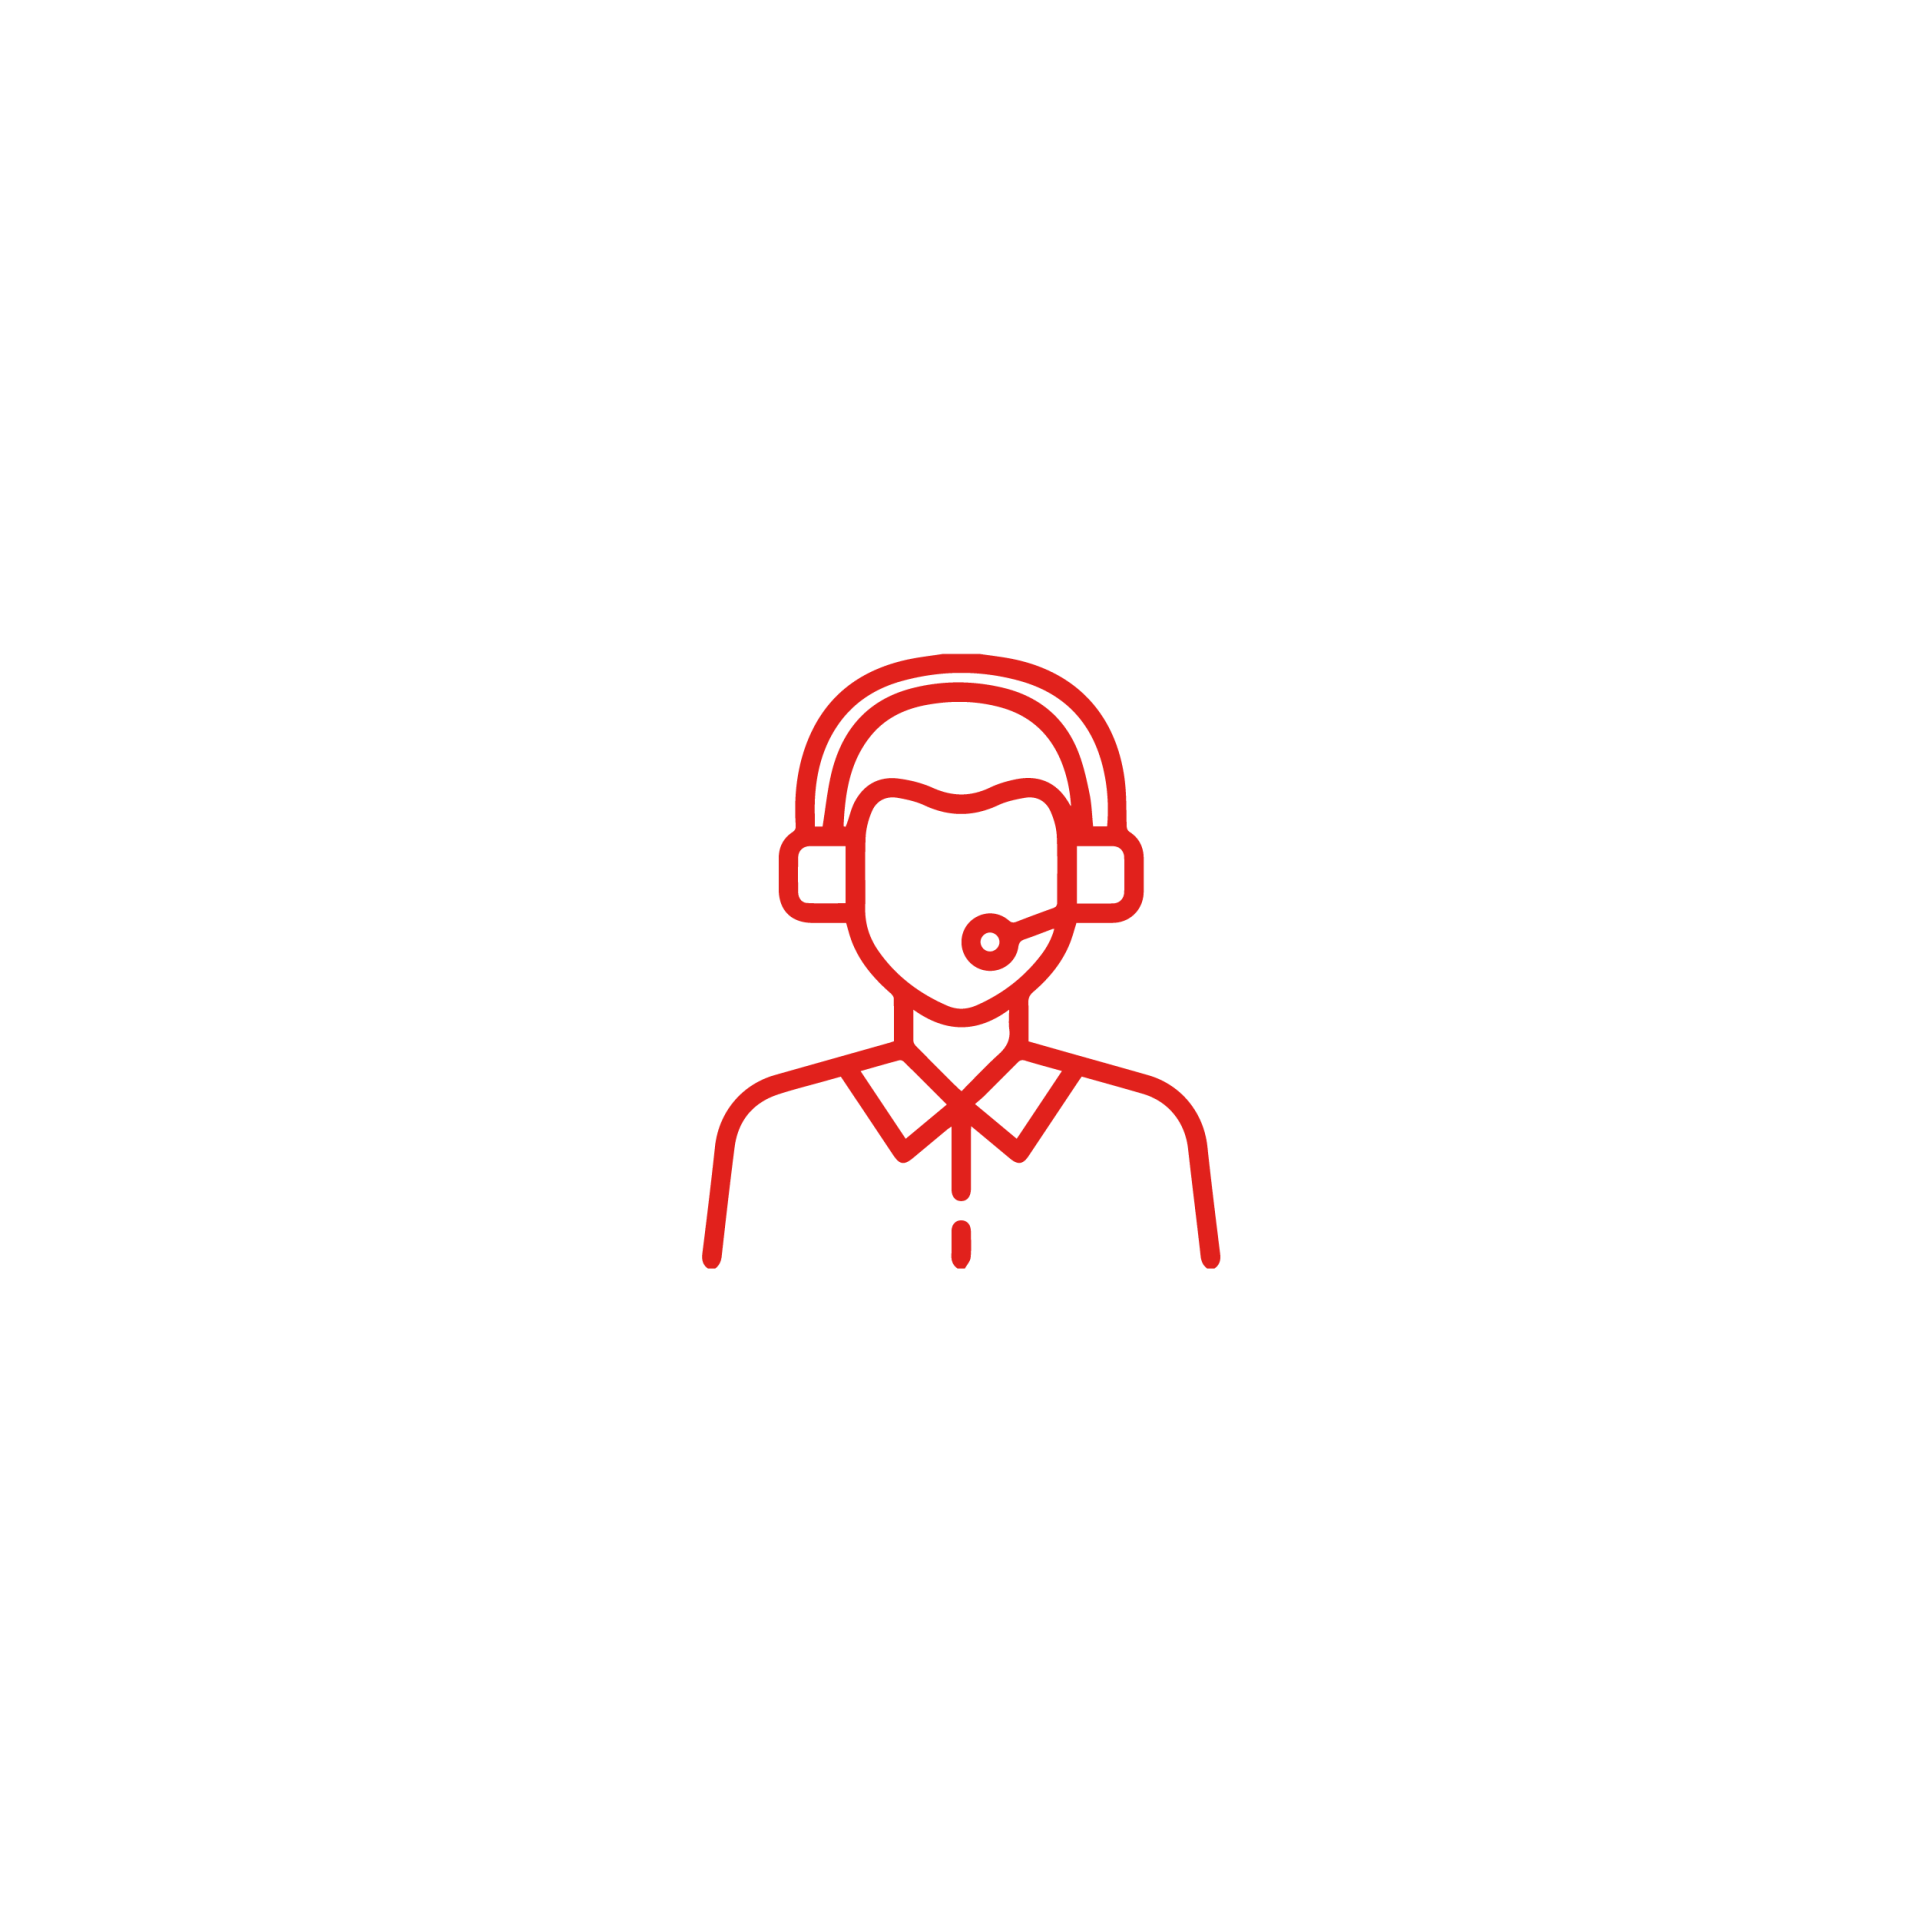 Un ícono de línea roja de un hombre que usa audífonos y un micrófono.